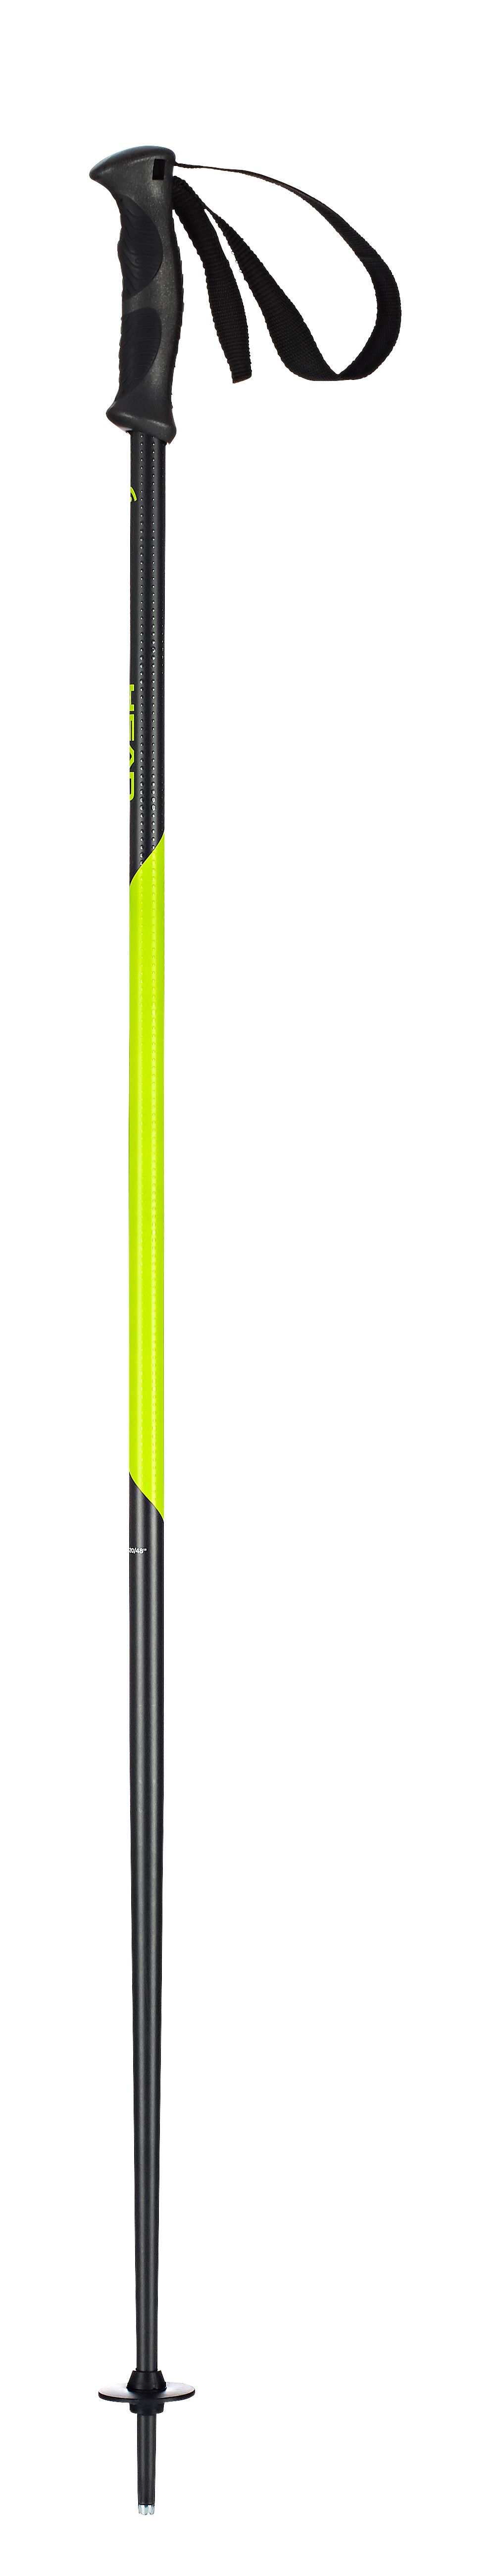 Bâtons de ski Multi S Yellow 2019